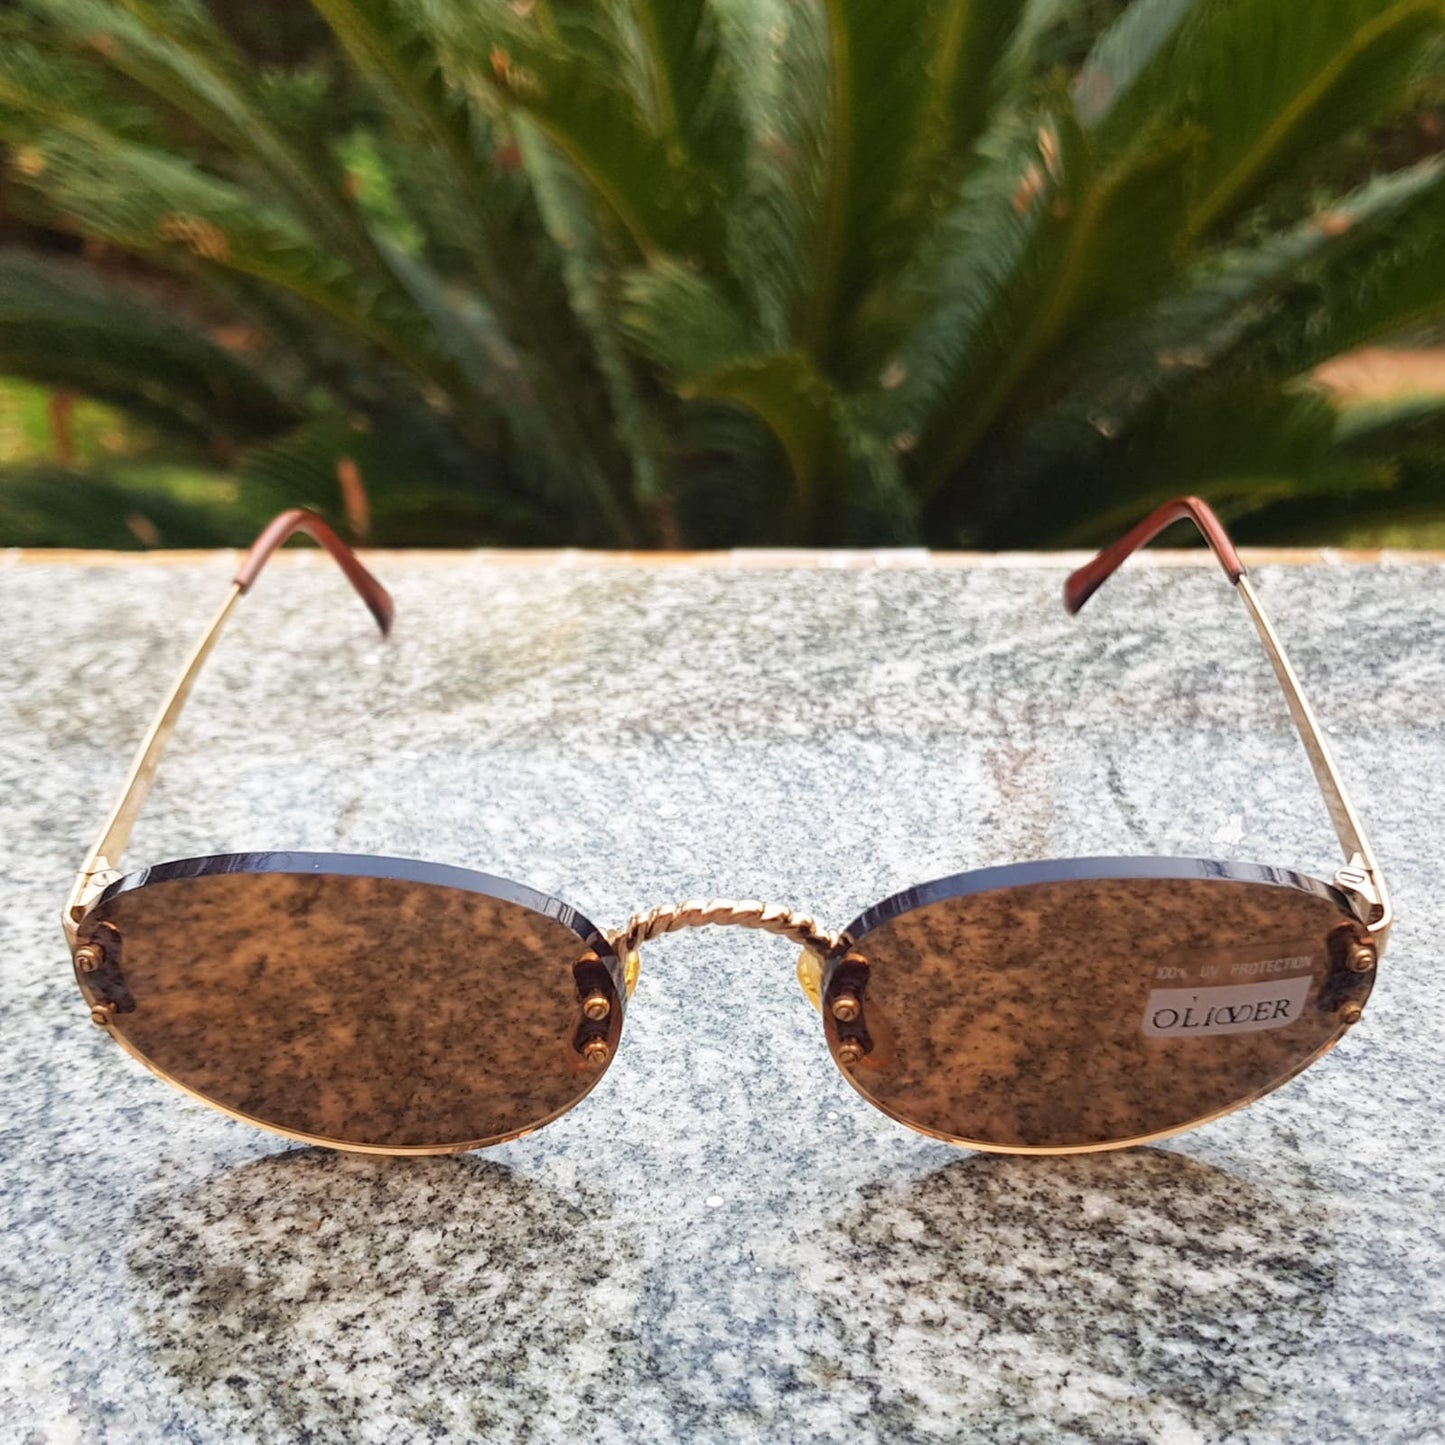 Oliver sunglasses frameless lunette brille NOS oval round lens